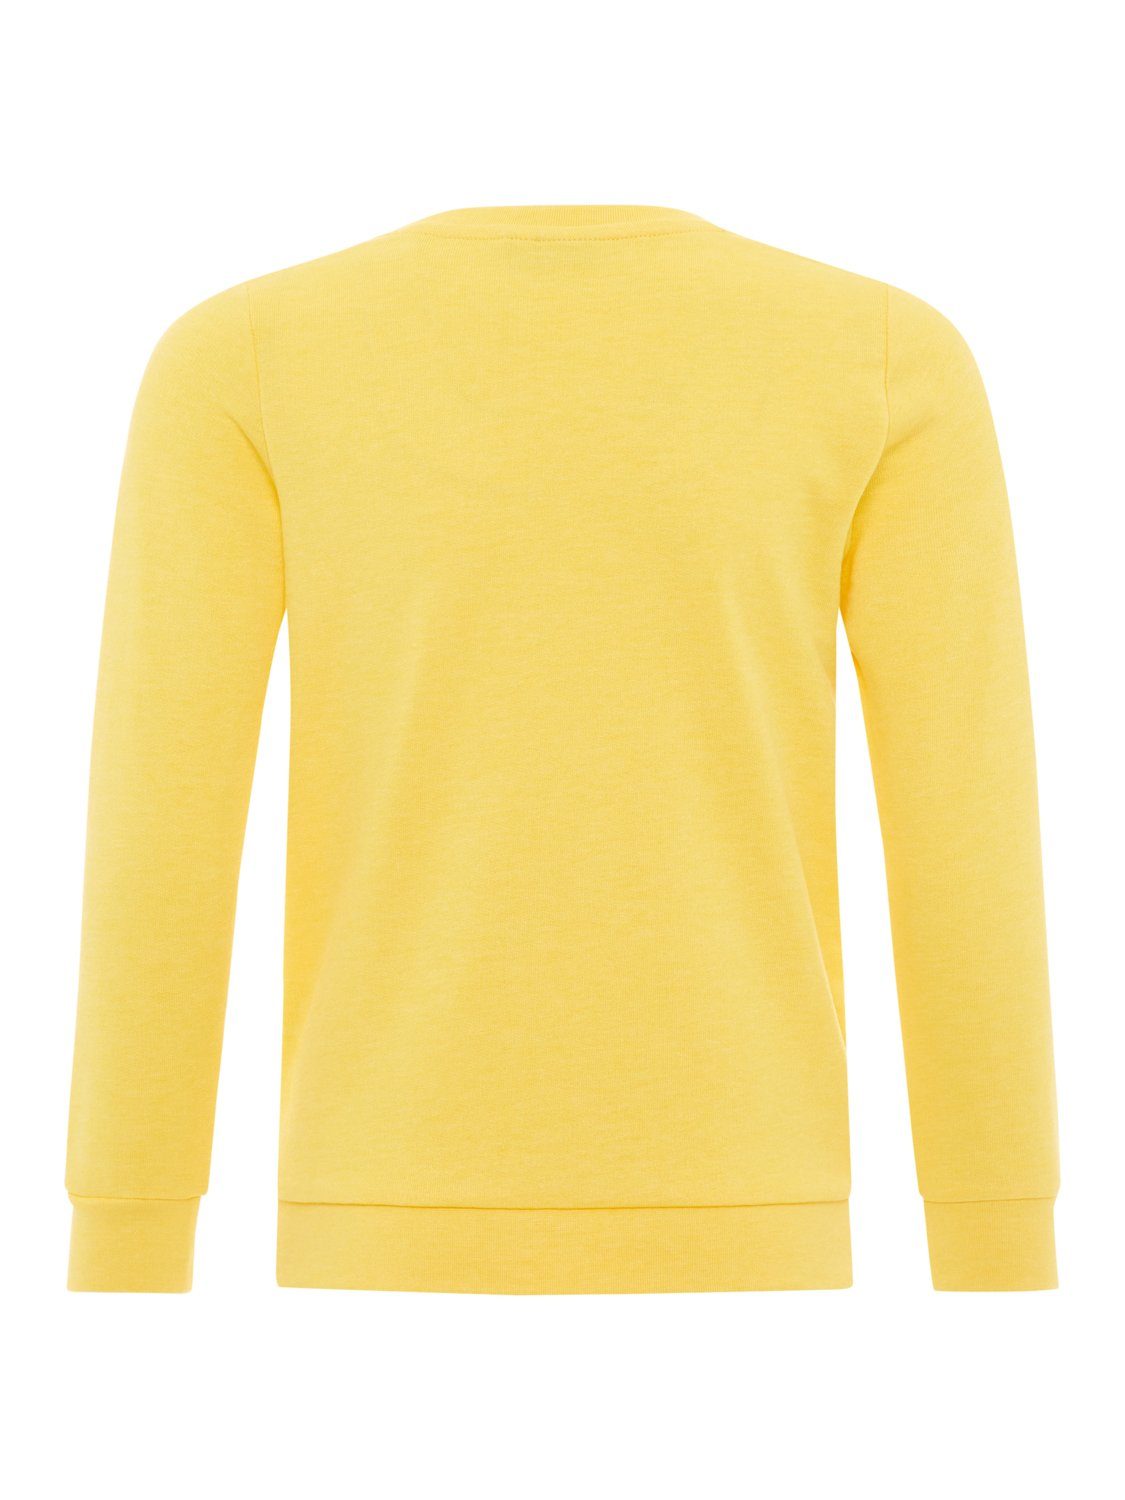 Rundhalspullover It Crew-Neck-Style Pullover gelb It Name in Name Mädchen